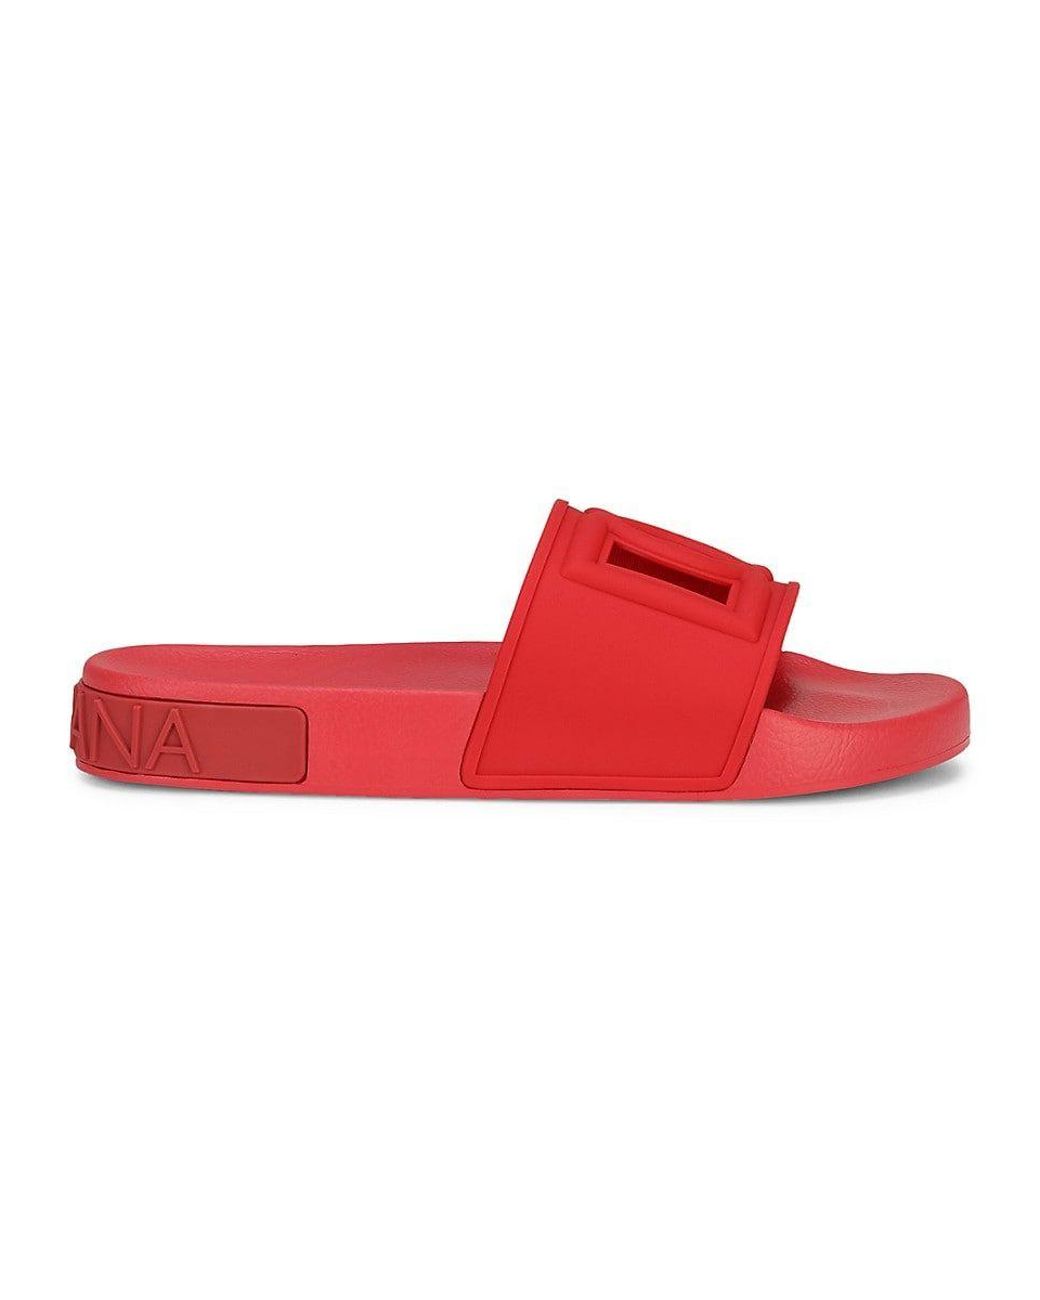 Dolce & Gabbana Interlocking Dg Cutout Pool Slide Sandals in Red | Lyst